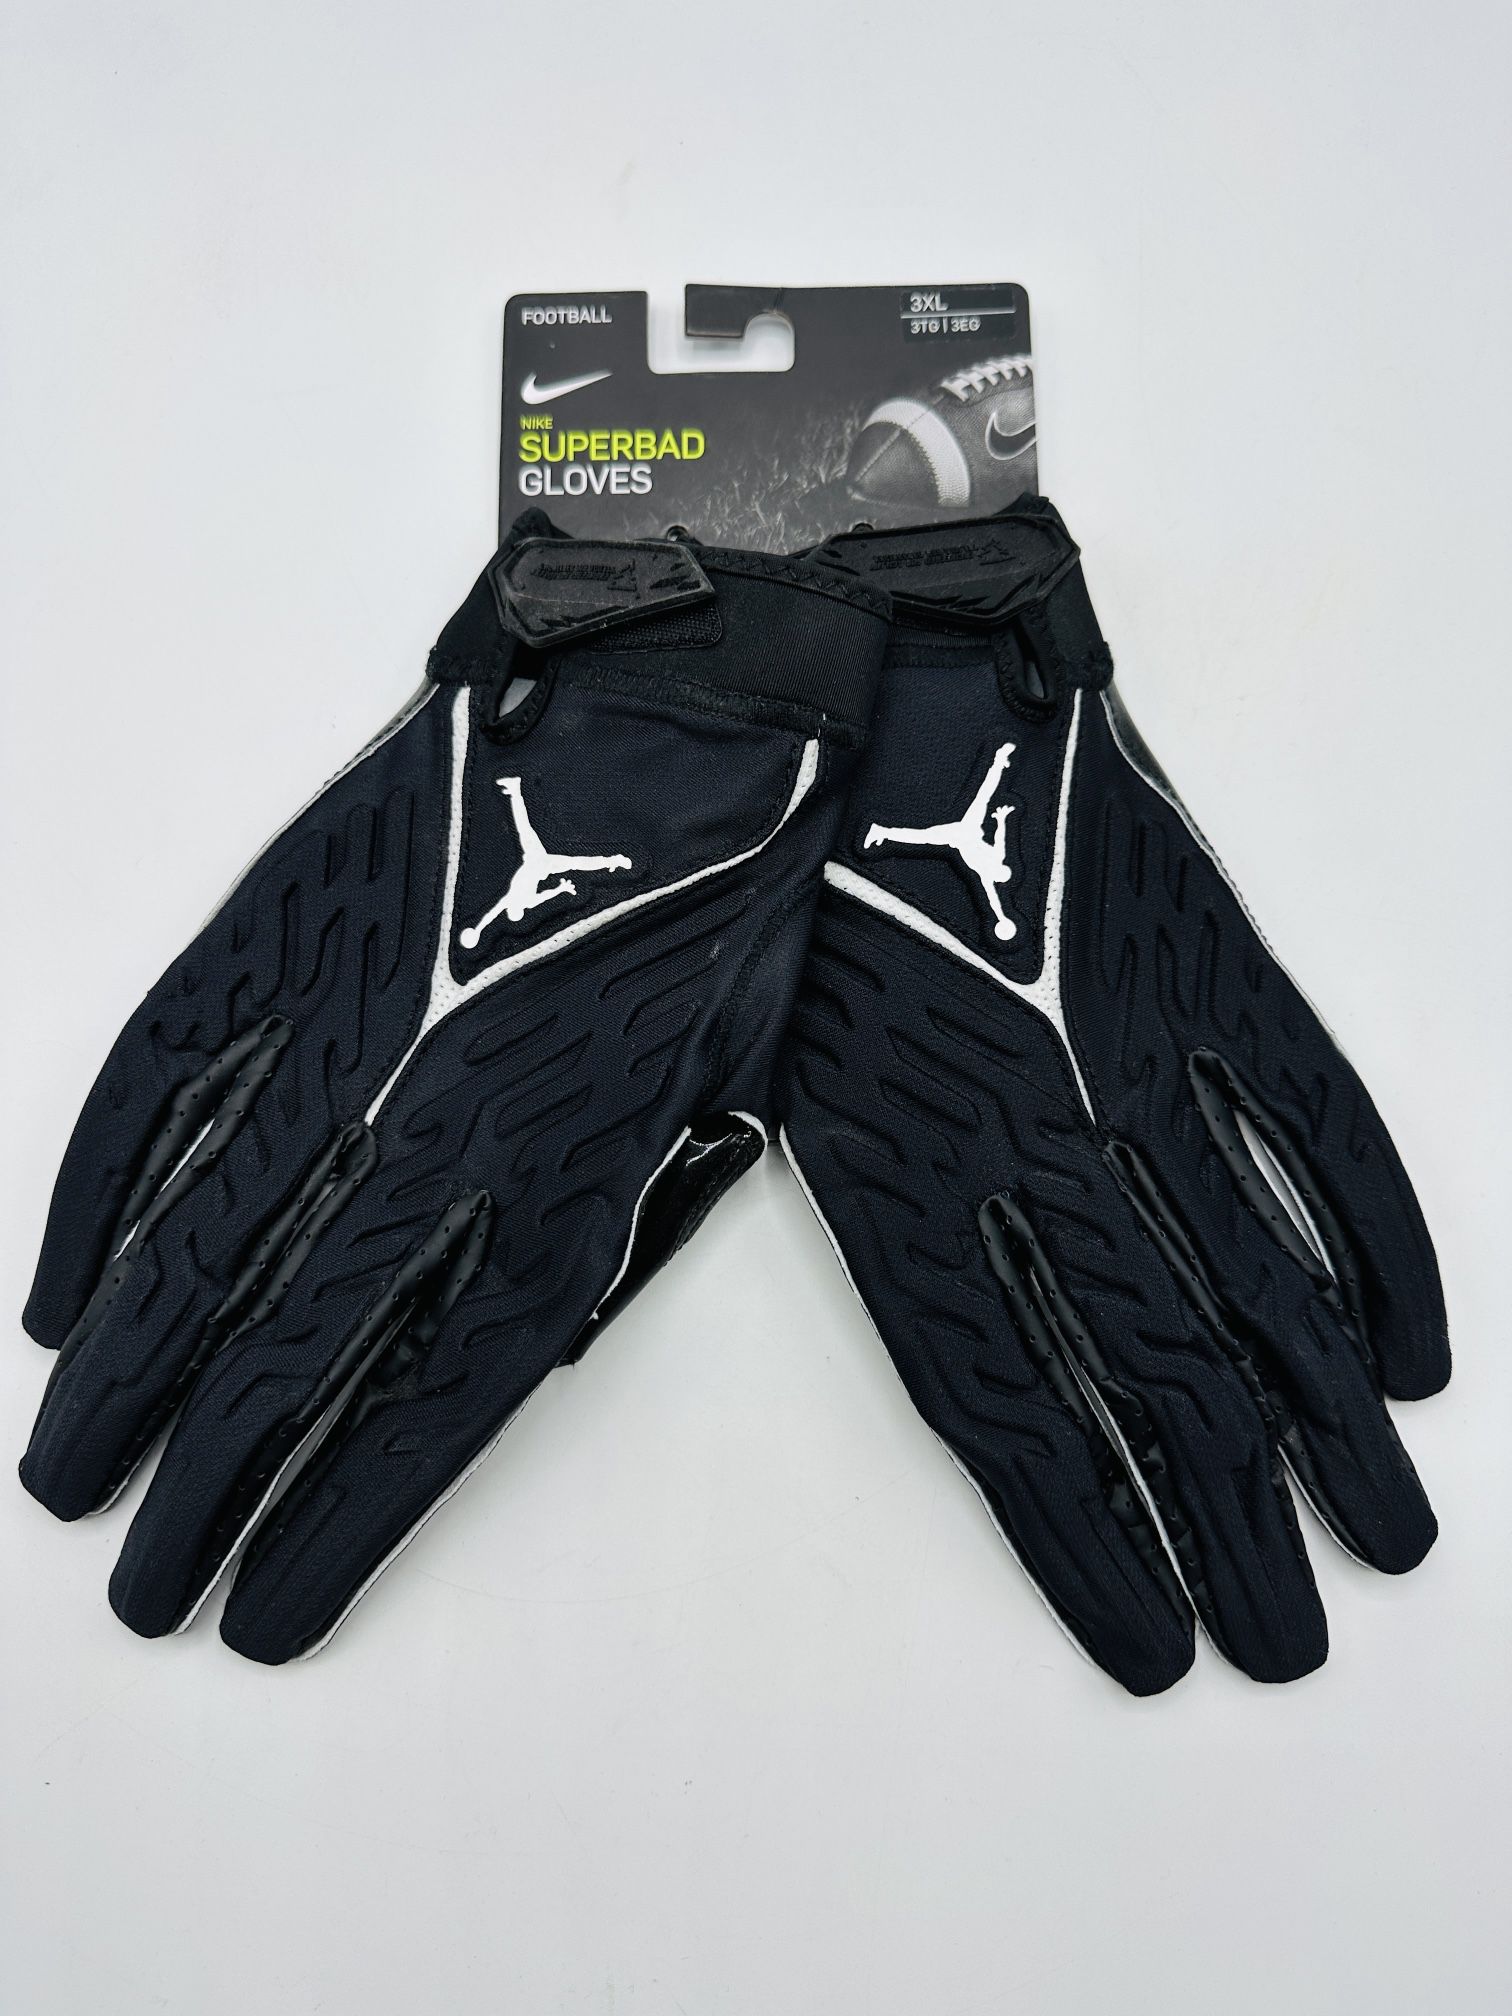 Men's Nike Superbad Football Jordan Receiver Gloves Black DM0052-091 Size  XXXL for Sale in Bakersfield, CA - OfferUp